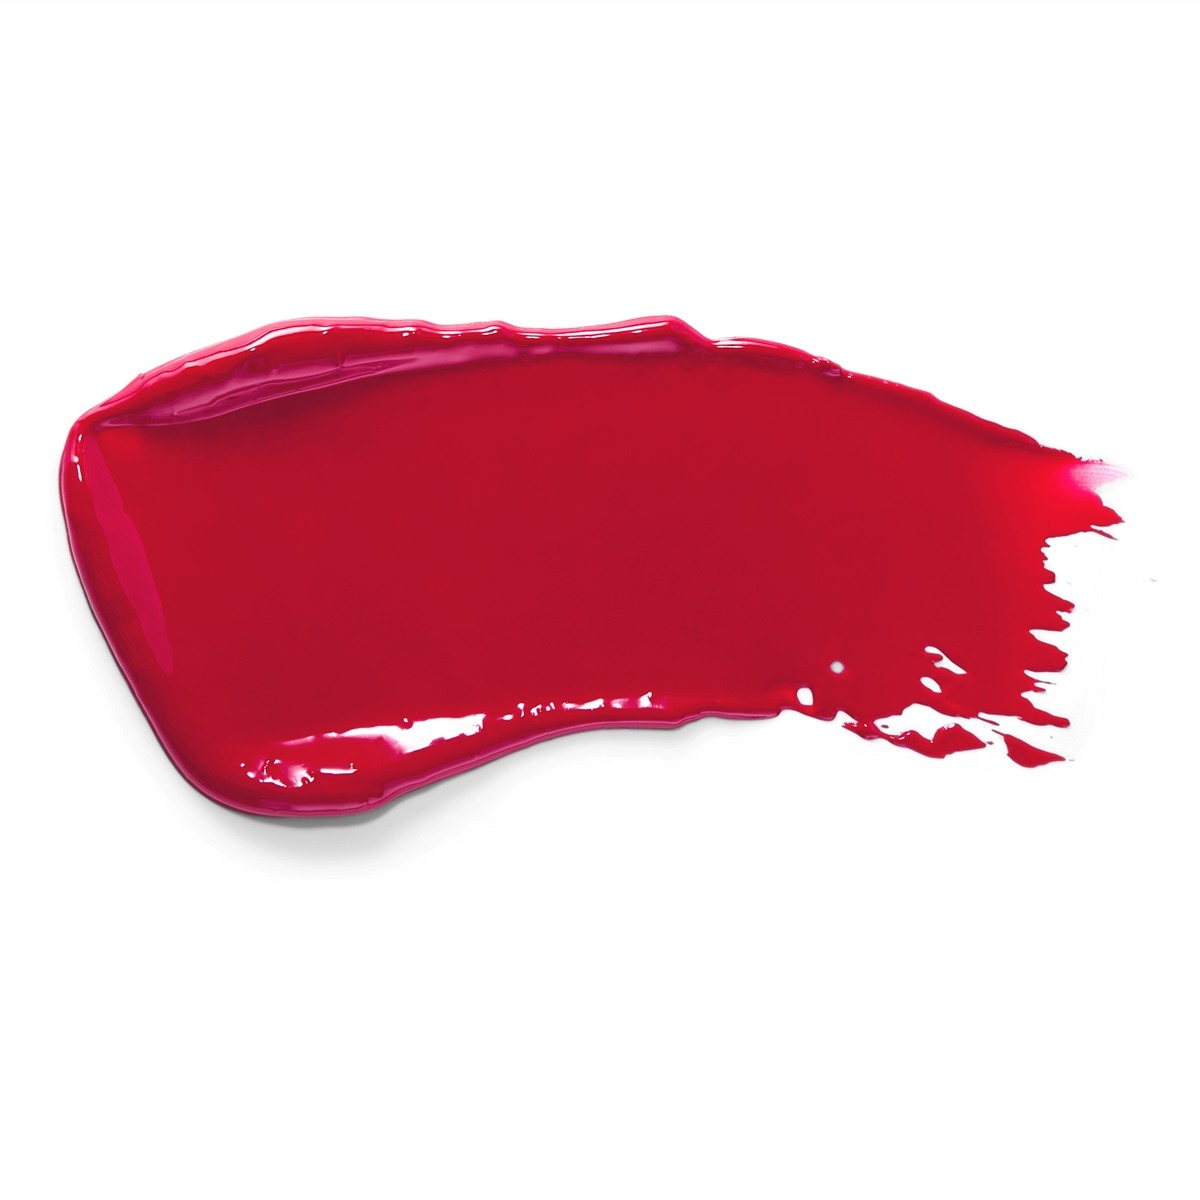 Benefit Cosmetics California Kissin' Color Lip Balm Ruby 22 3g